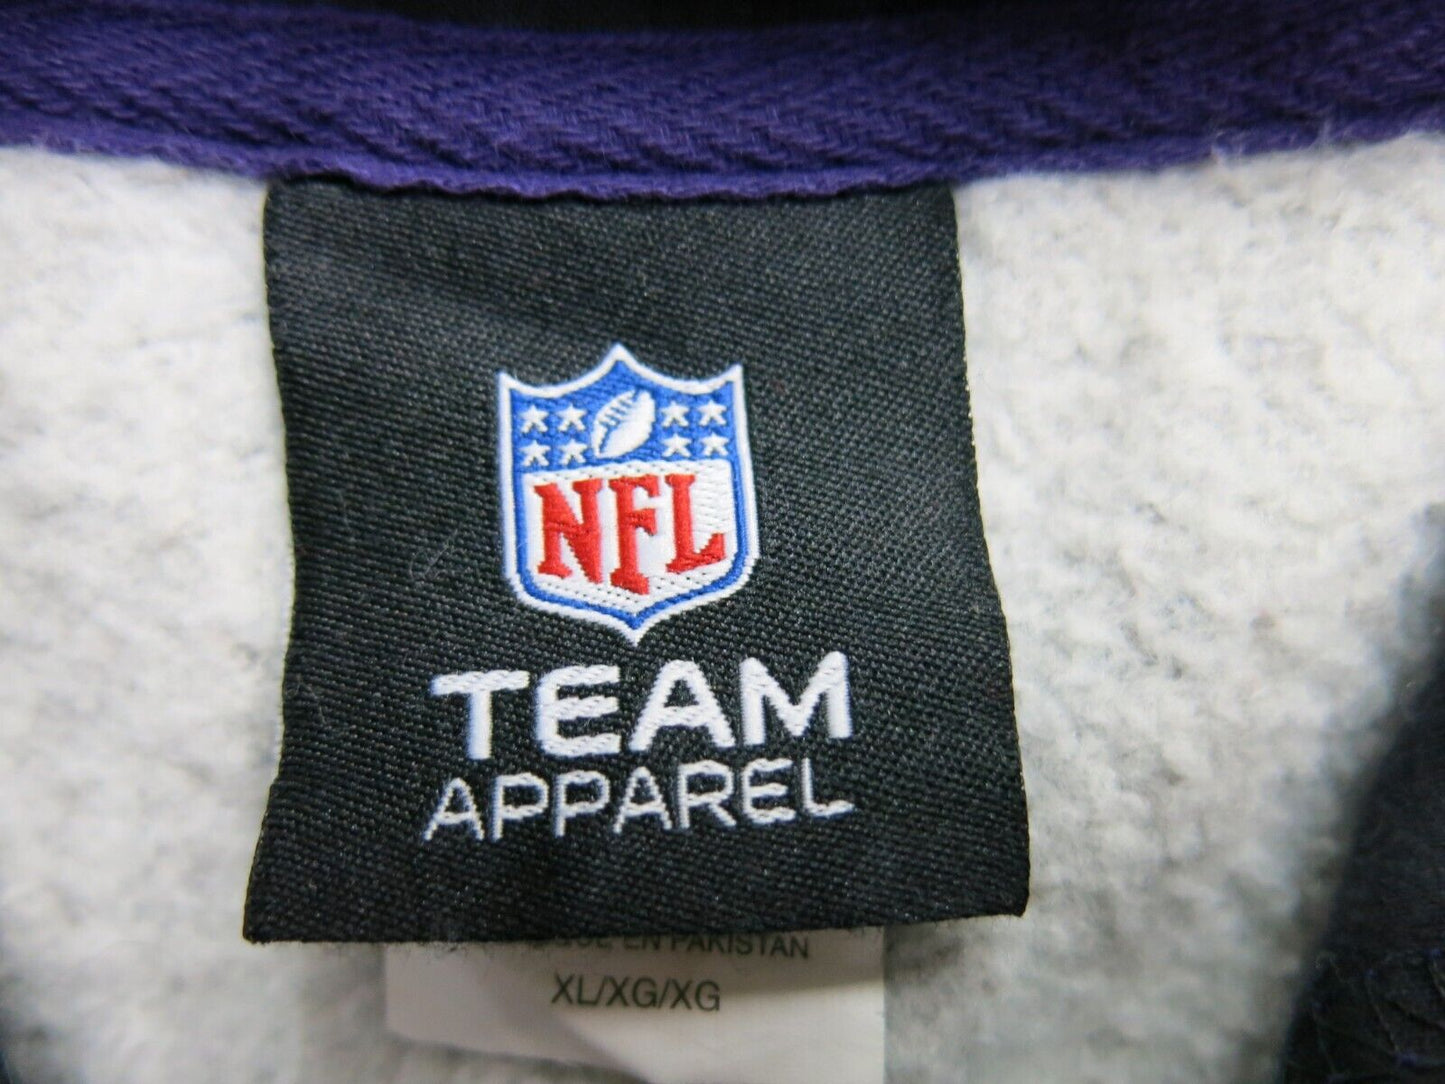 NFL Mens American Football Conference Full Zip Hoodie  Long Sleeve Blue Gray XL